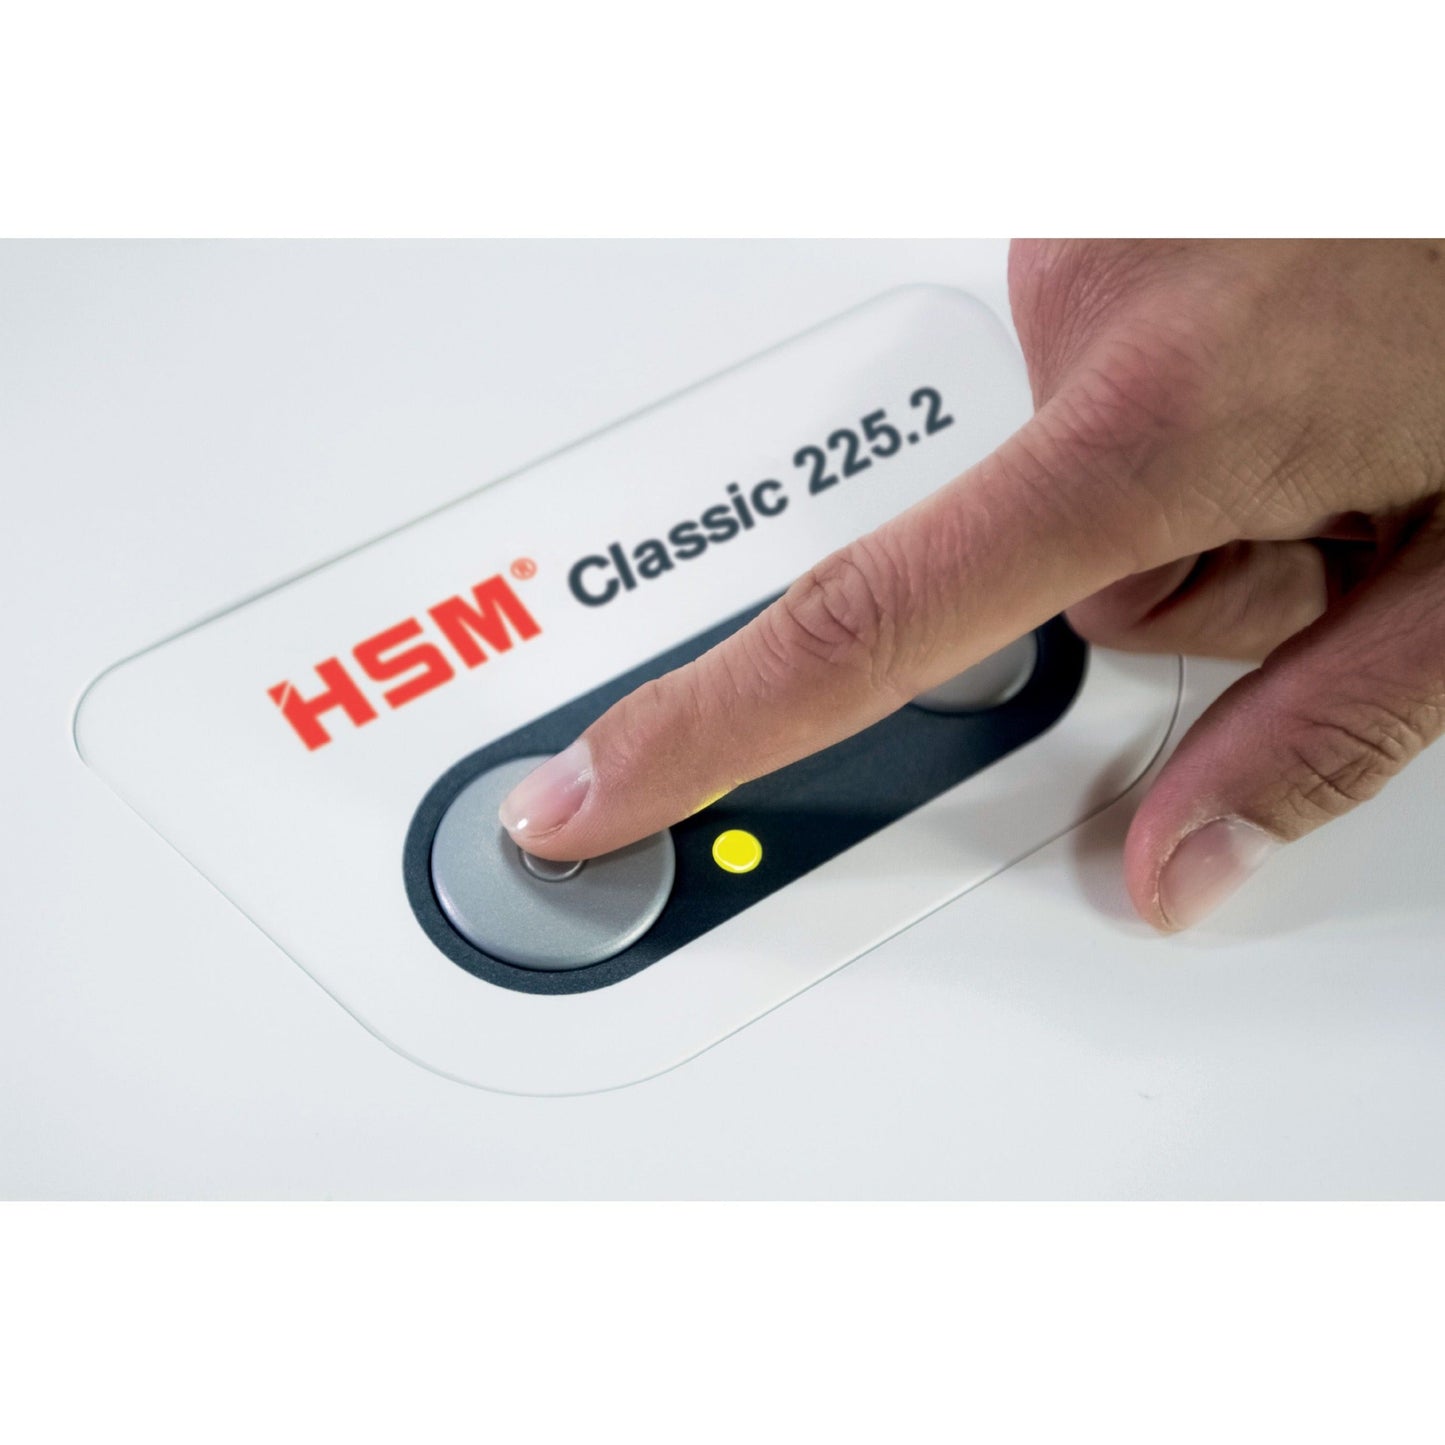 HSM Classic 225.2 HS L6 Cross-Cut Shredder